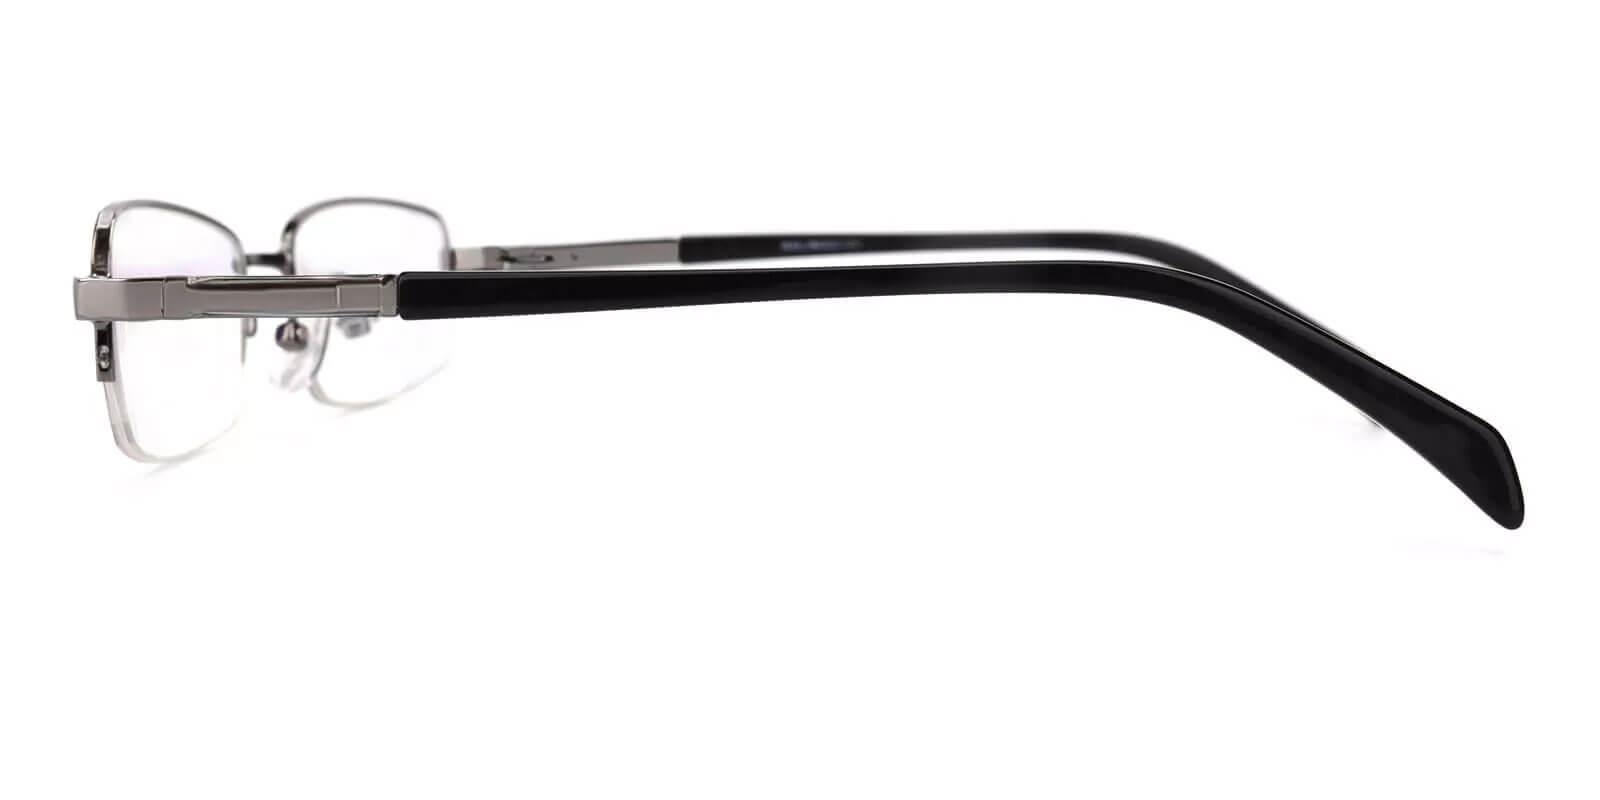 Michael Gun Metal Eyeglasses , NosePads , SpringHinges Frames from ABBE Glasses